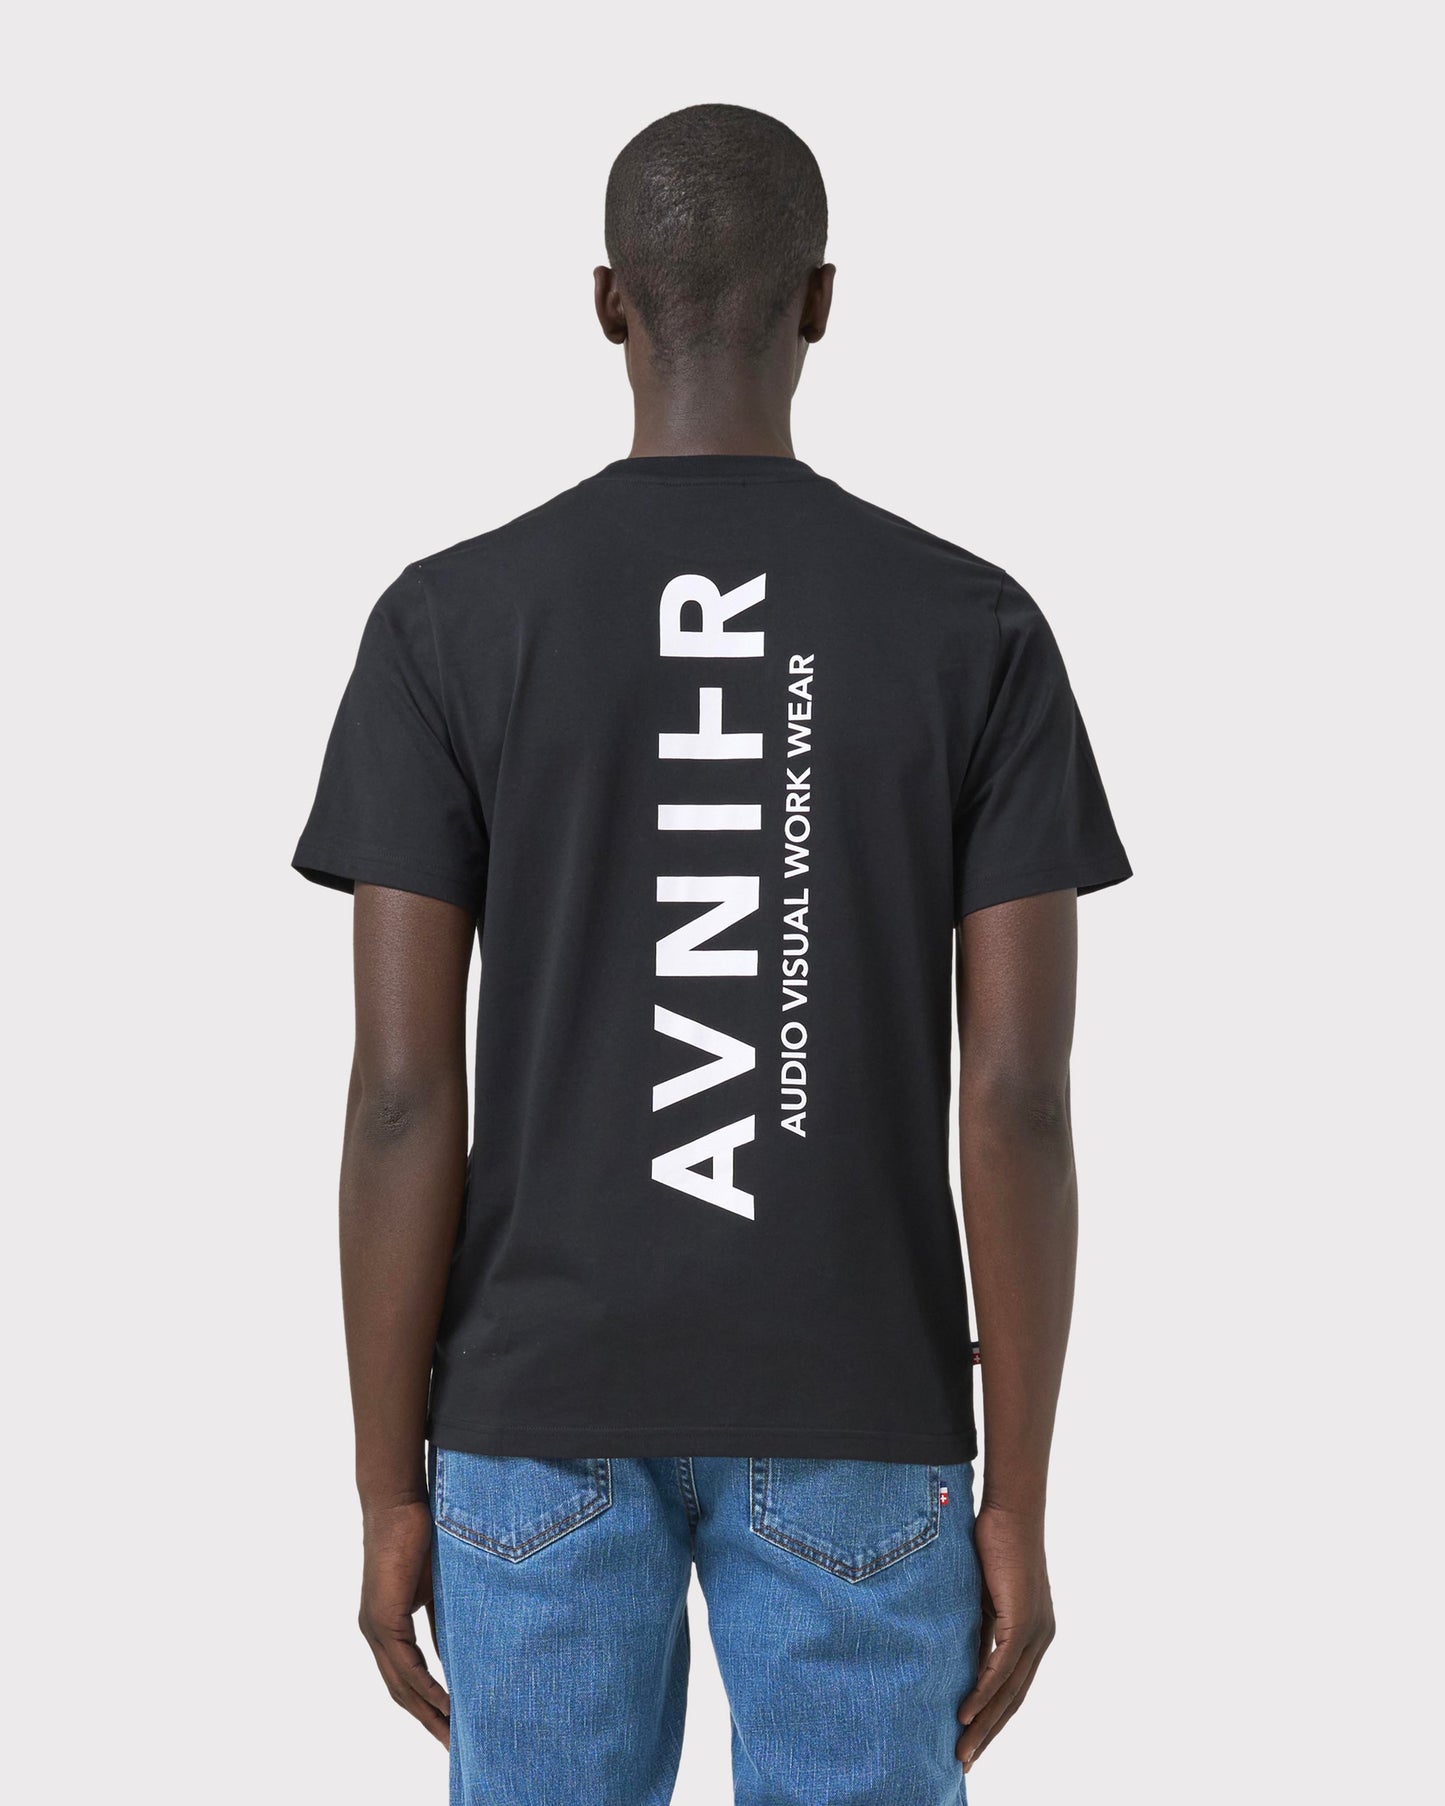 t-shirt-source-black-vertical-v3-avnier-audiovisual-work-wear-4-silhouette-dos - noir